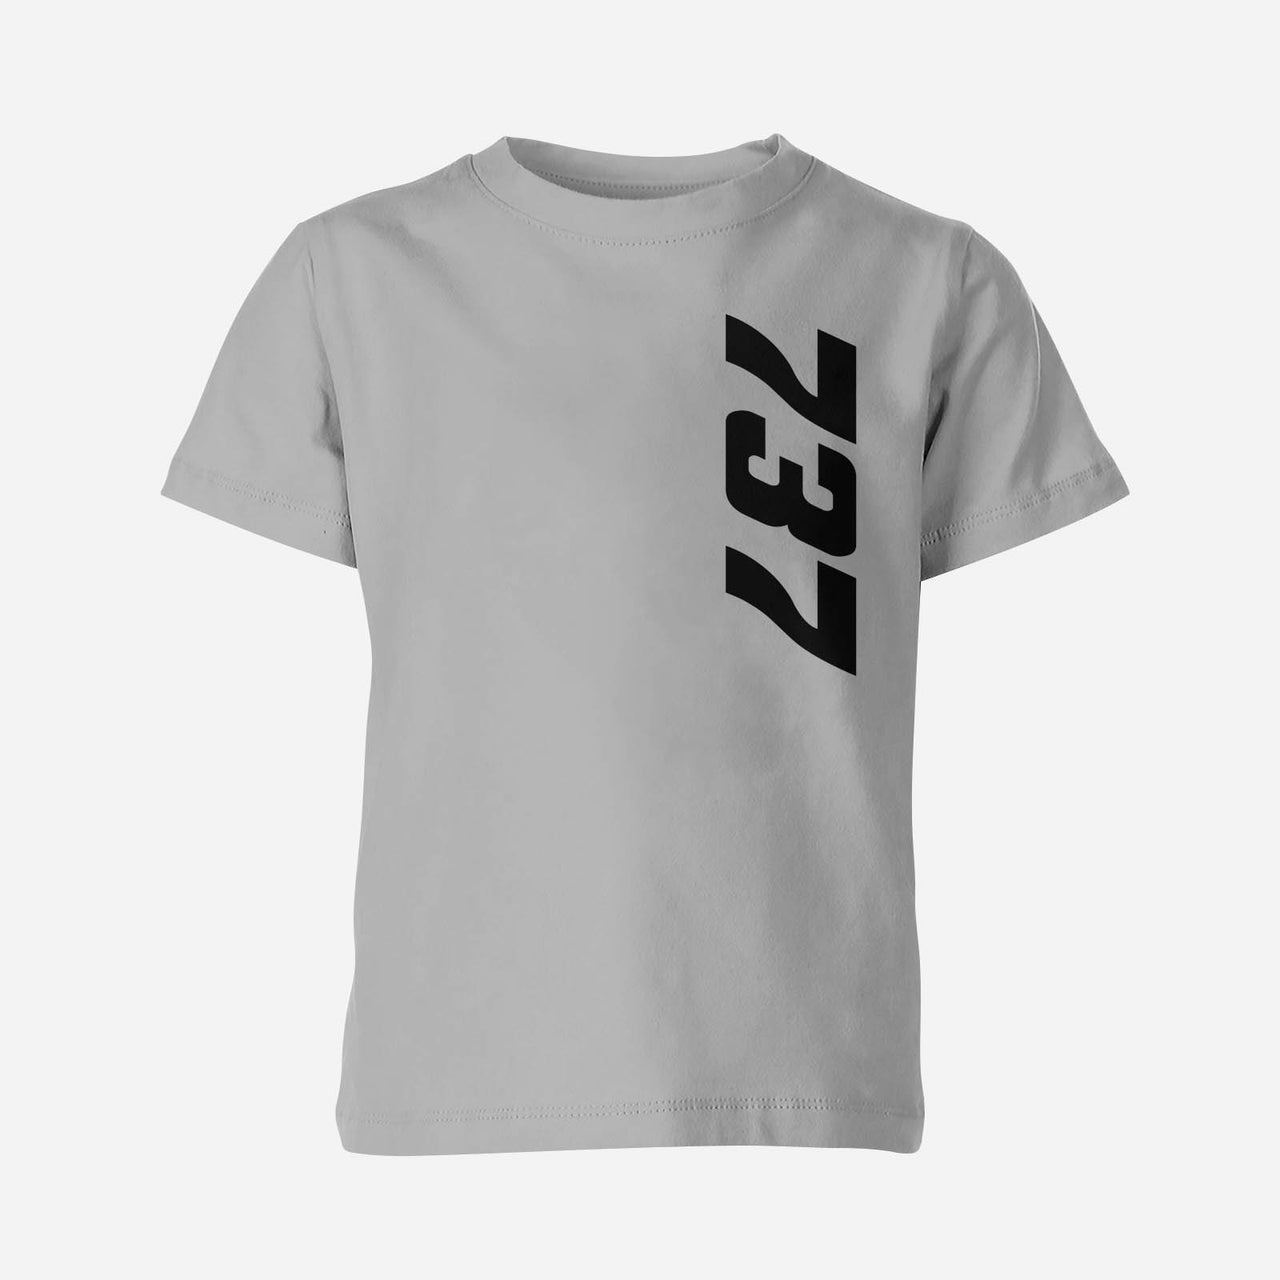 737 Side Text Designed Children T-Shirts